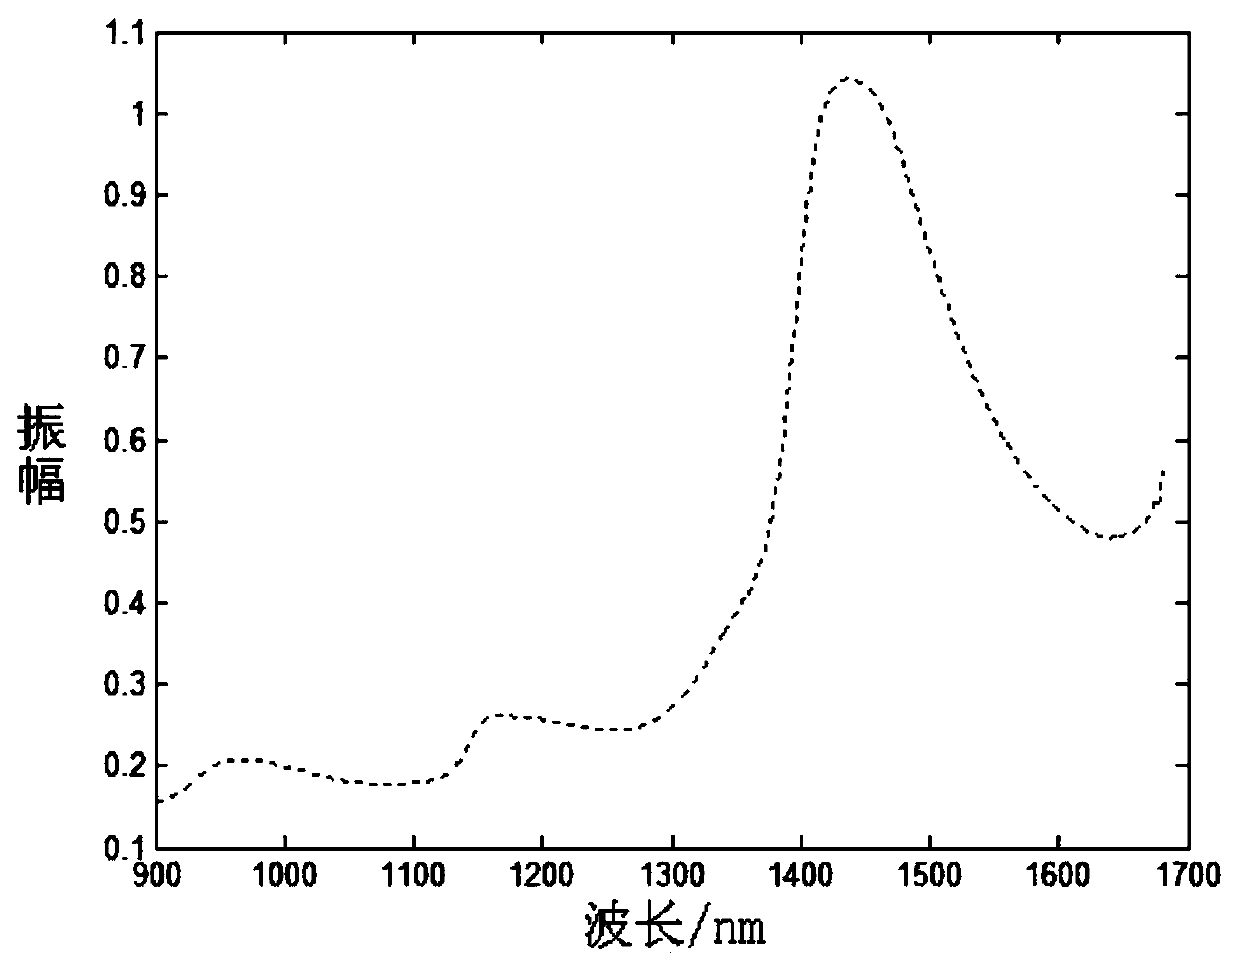 Near-infrared spectroscopy noise reduction method for pesticide residue detection